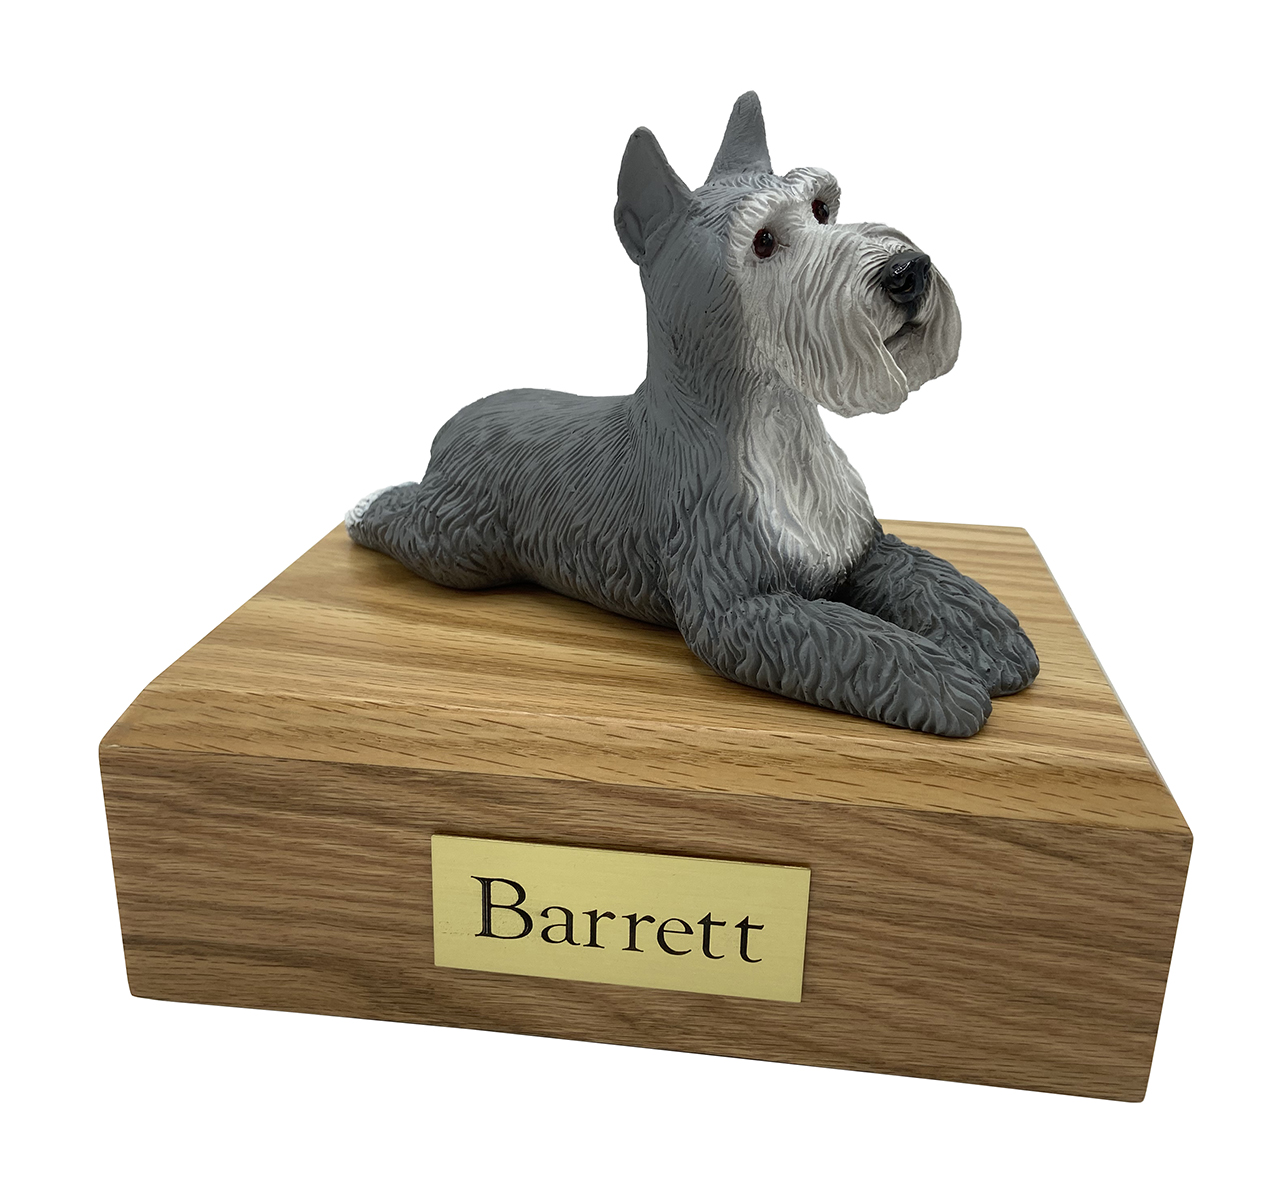 Dog, Schnauzer, Grey (Ears Up) - Figurine Urn